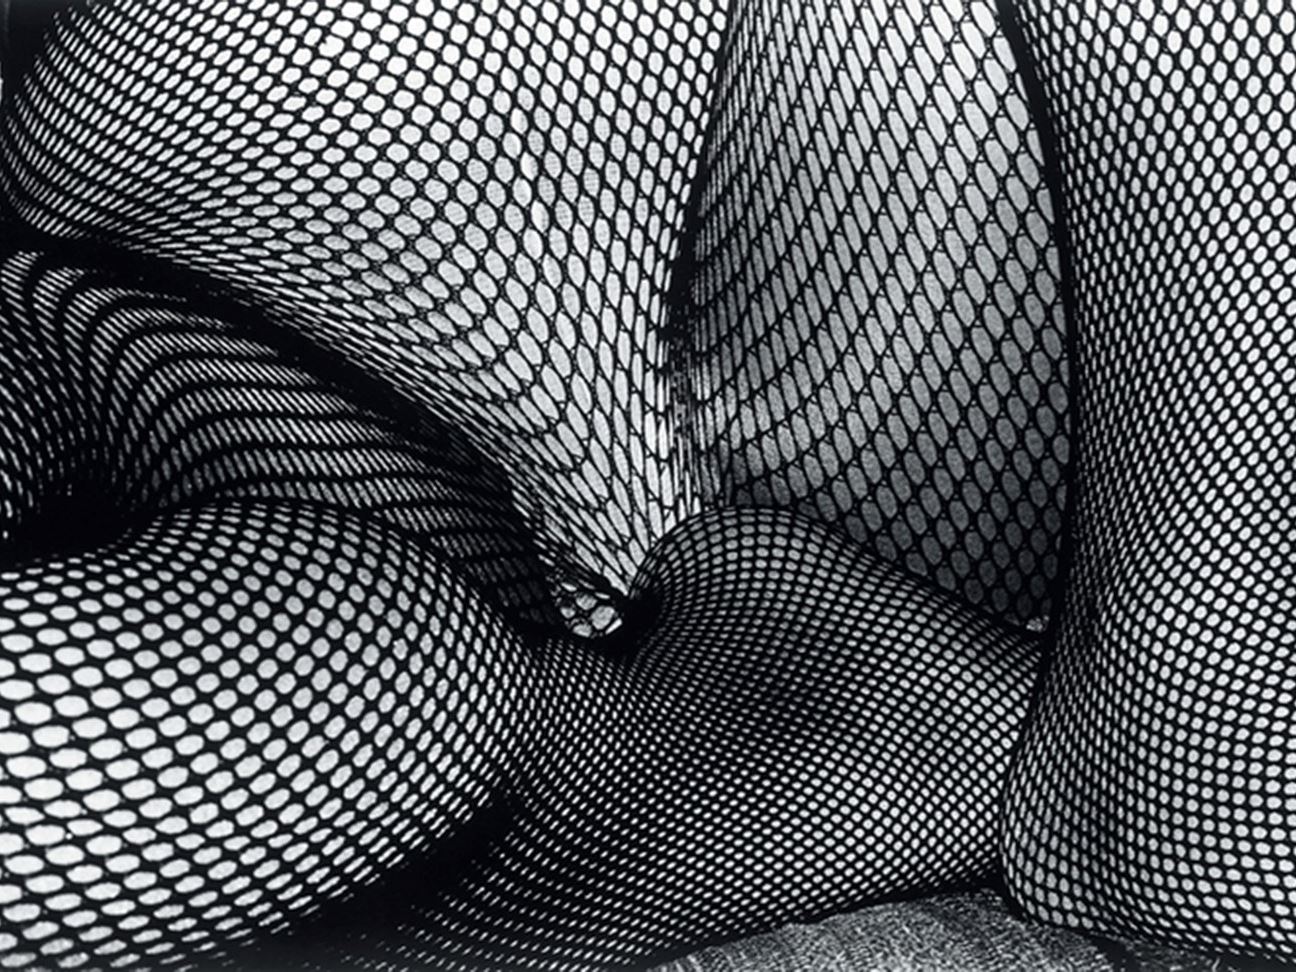 Daido Moriyama: The Erotics of Photography | Ocula Feature